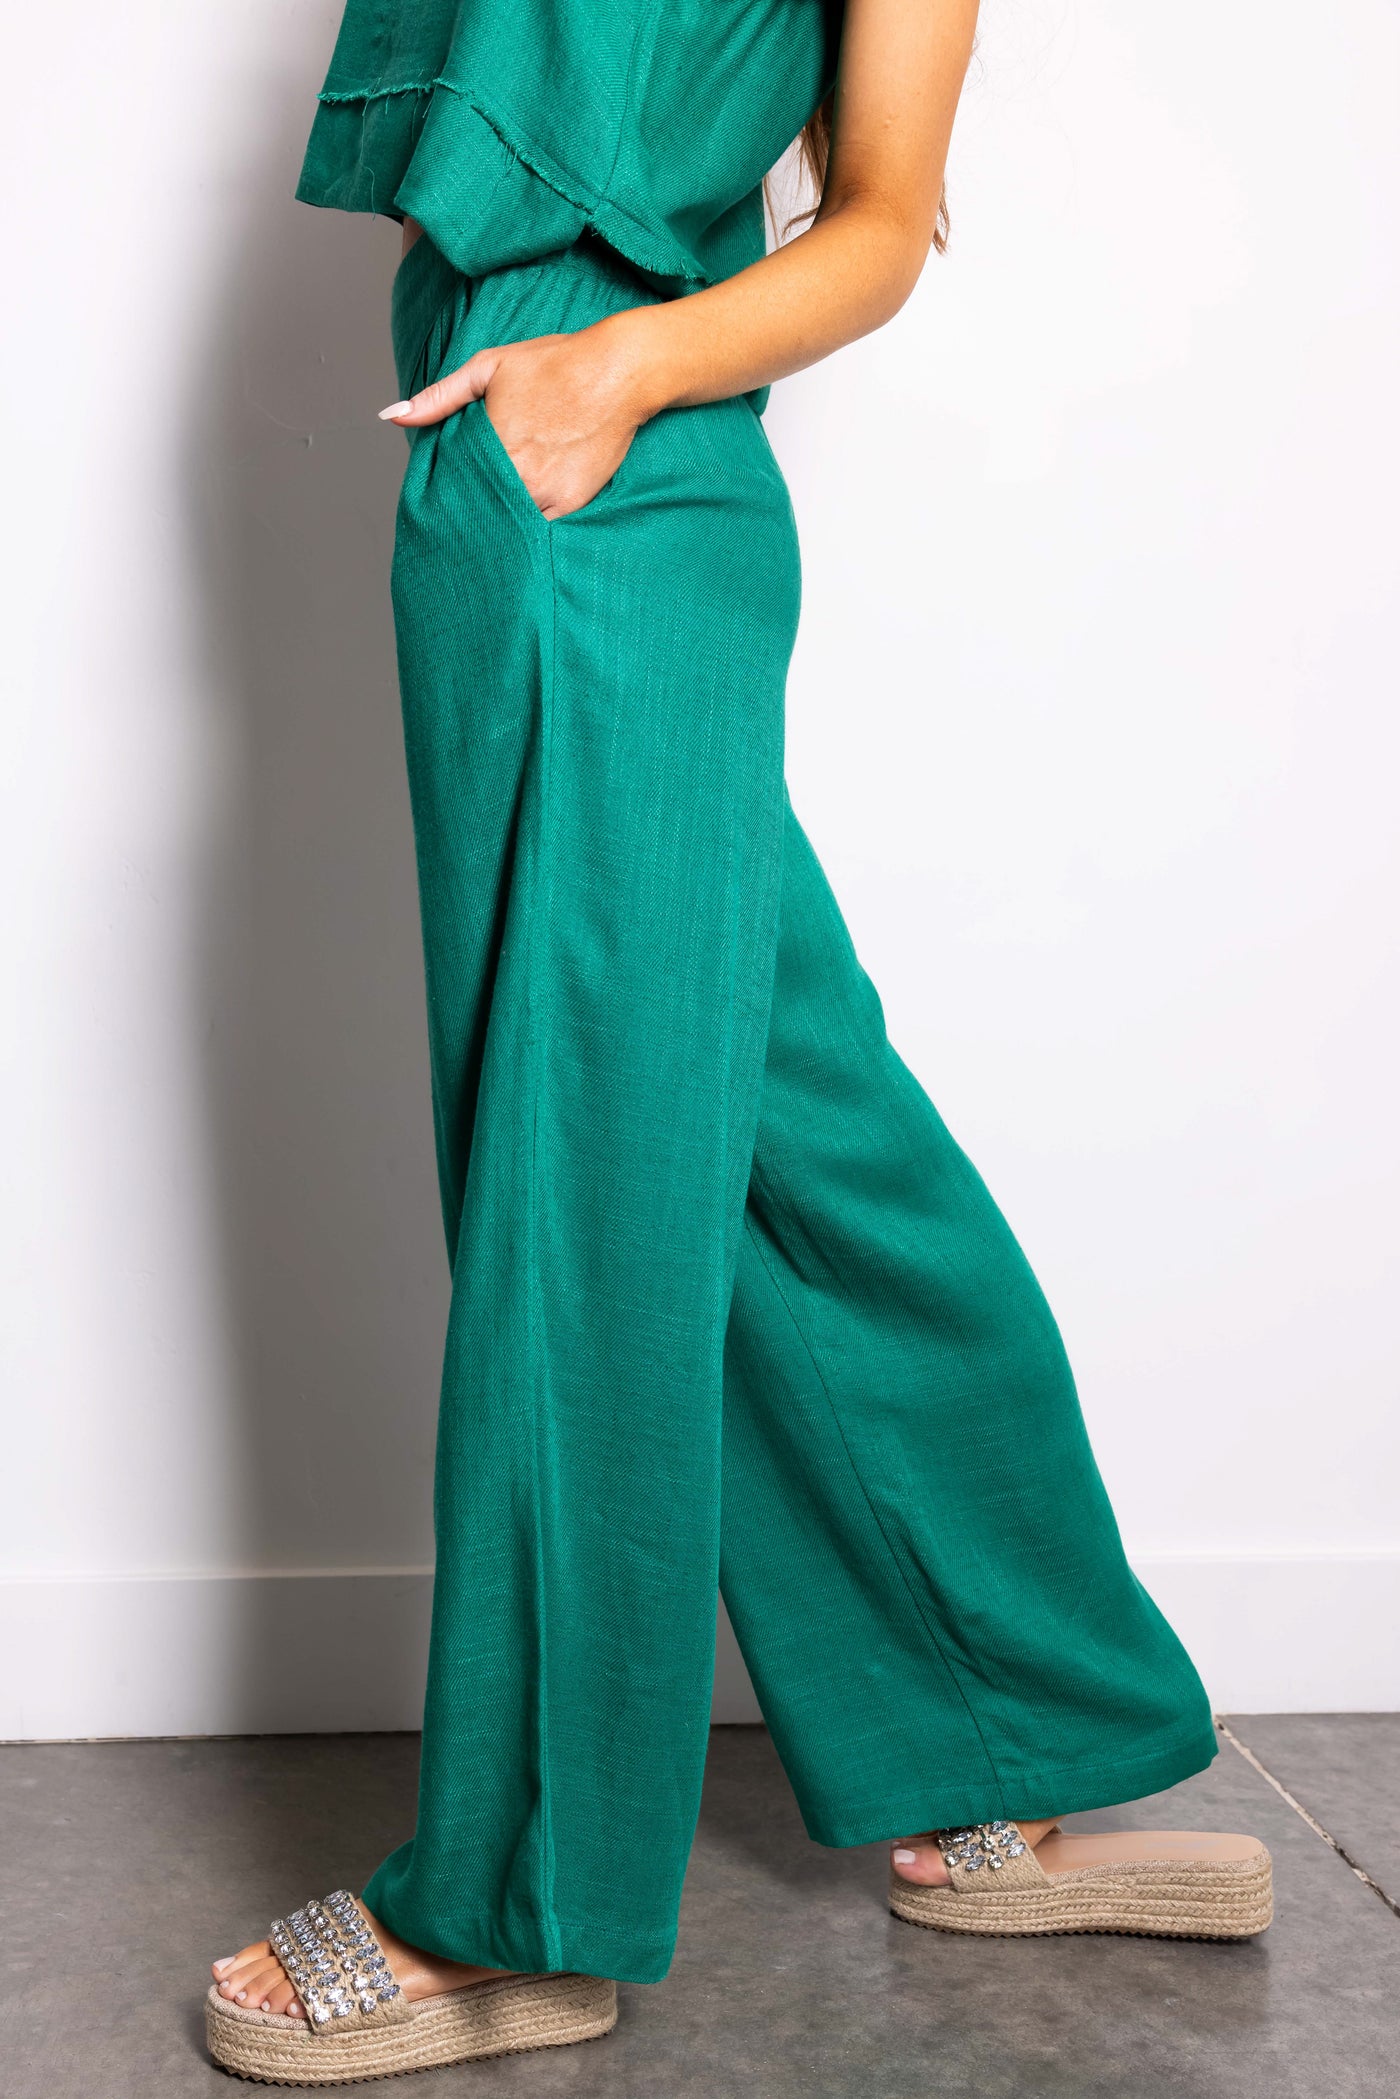 Jade Woven Sleeveless Top and Pants Set